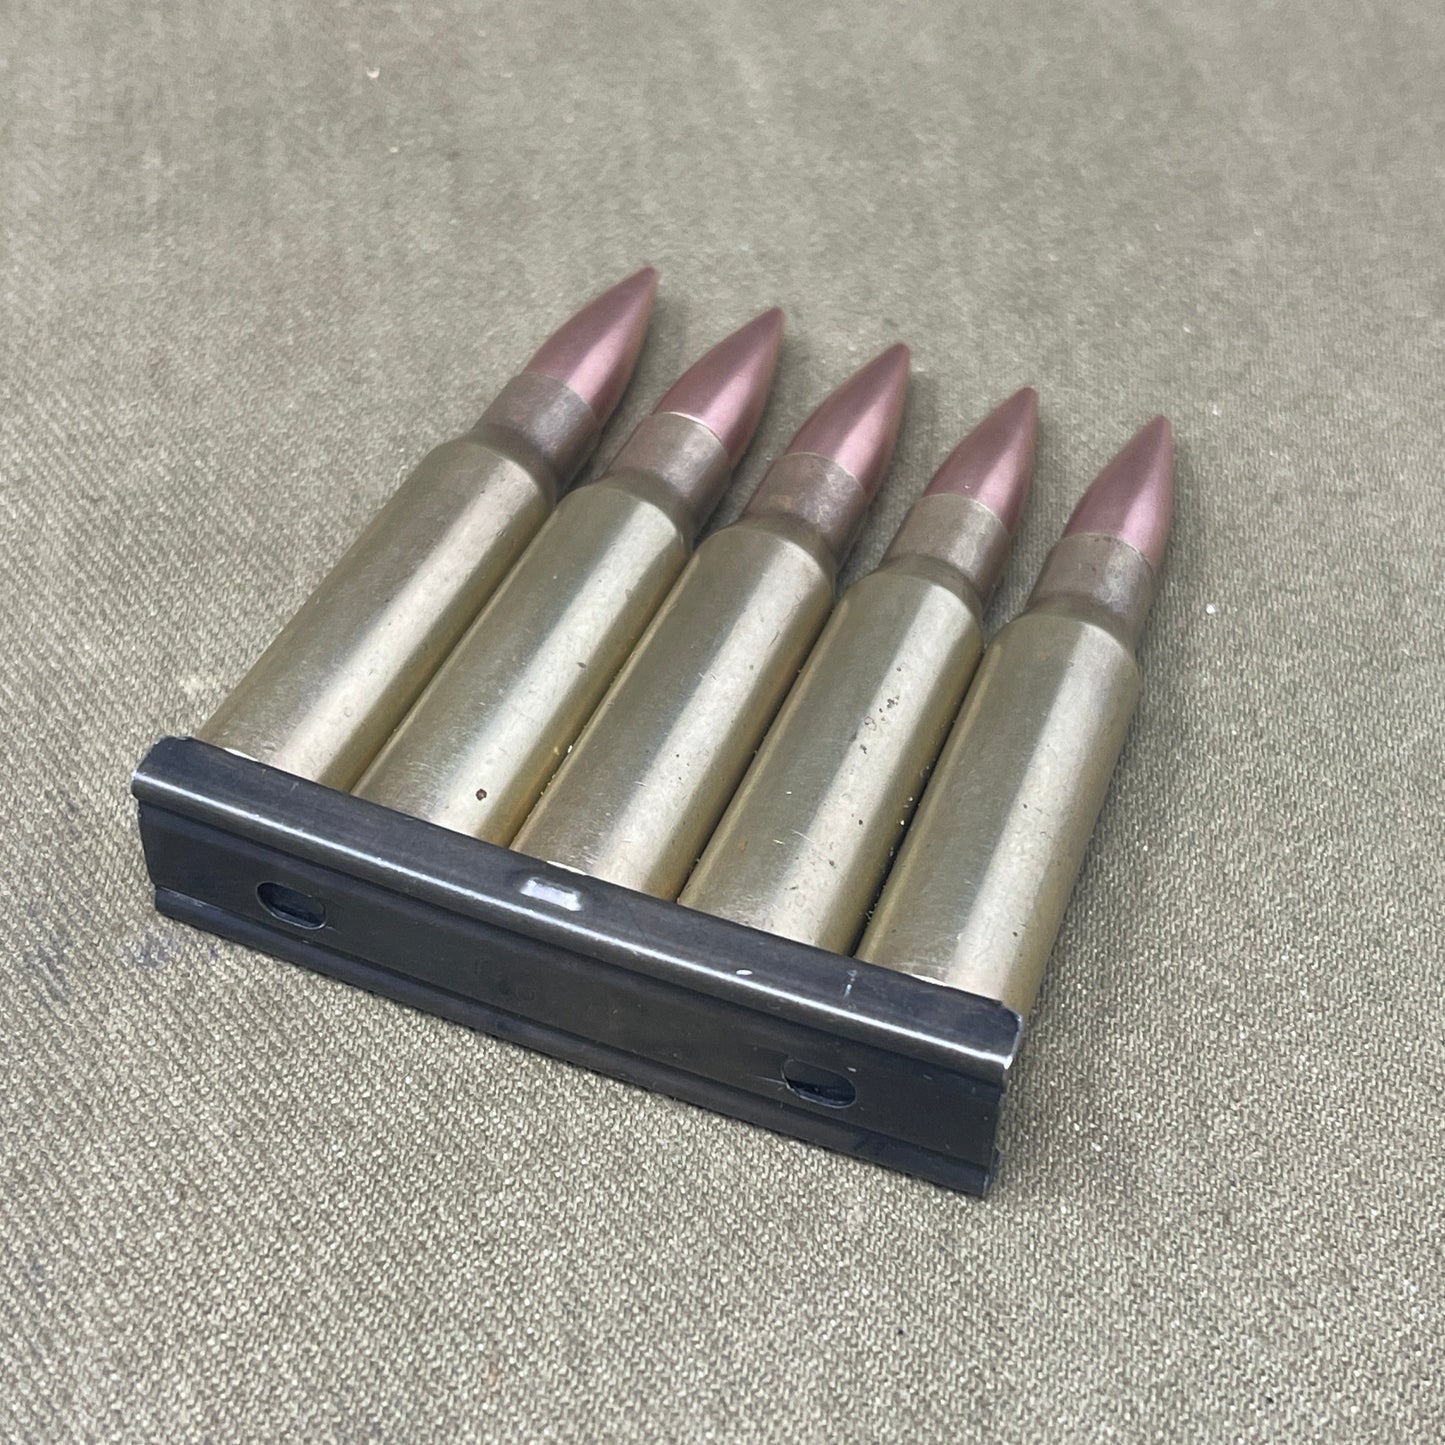 5 x  7.62x51mm FNB Inert Cartridges in Clip